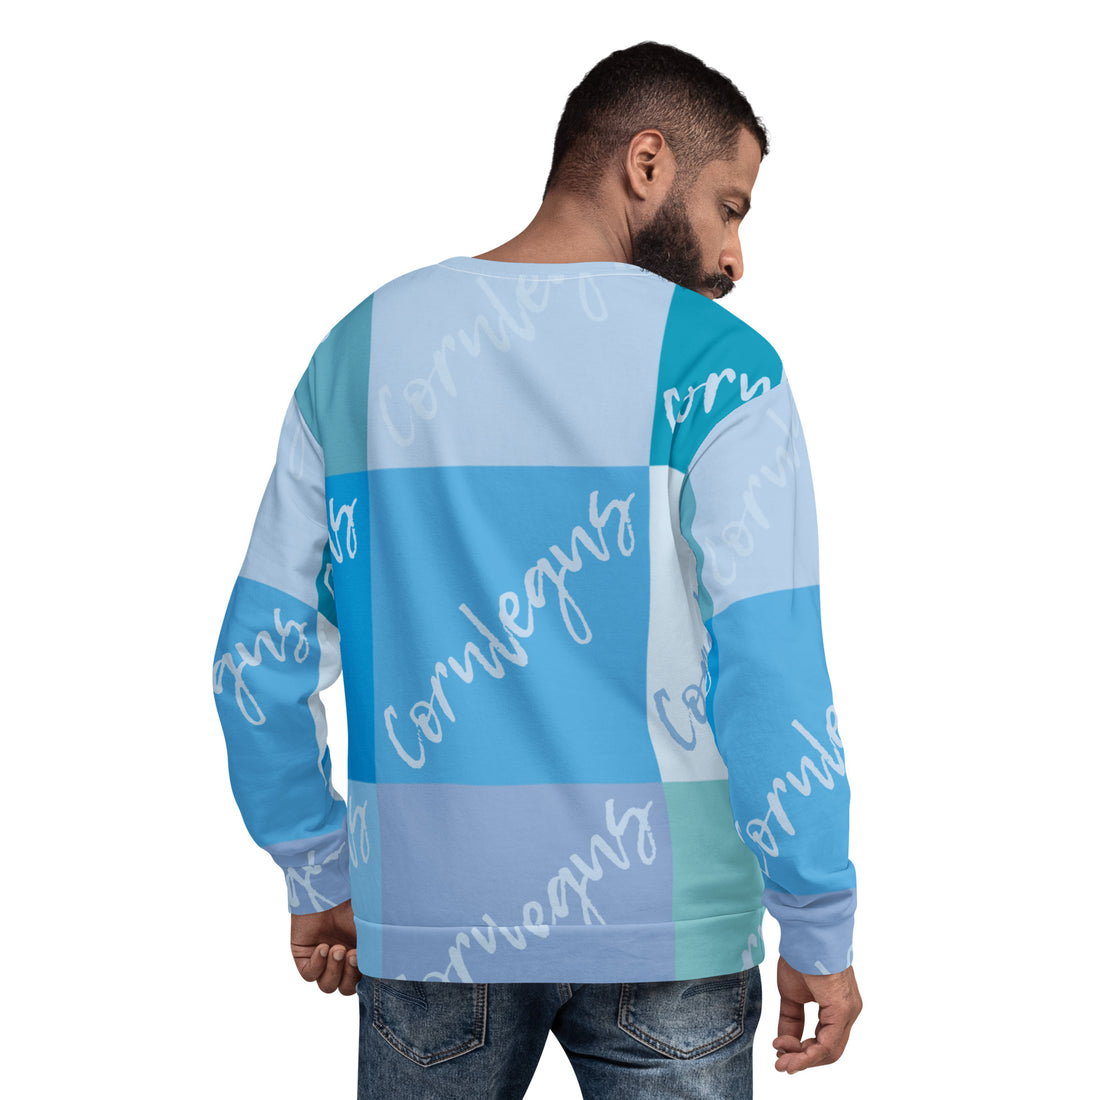 BlueLegus Sweatshirt